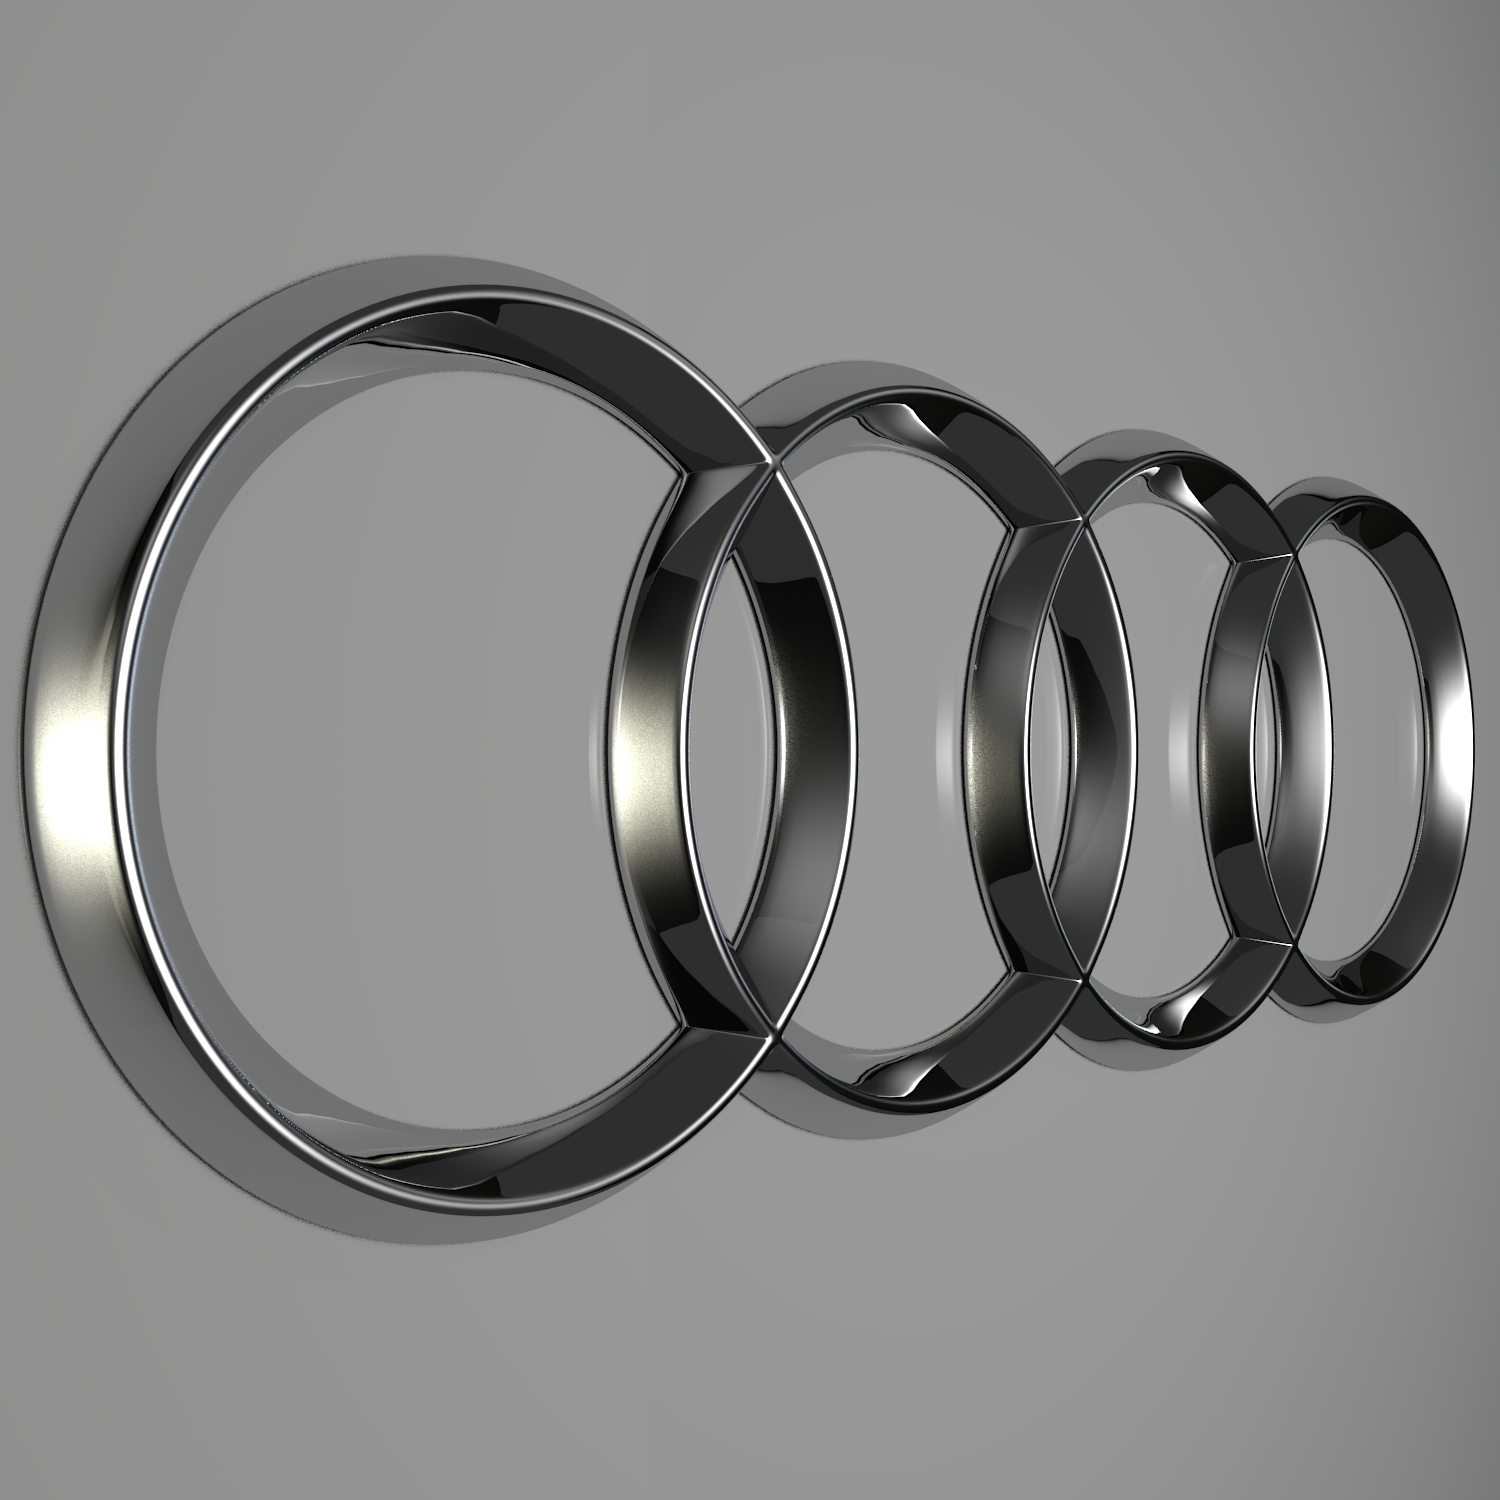 2,388 Audi Symbol Images, Stock Photos, 3D objects, & Vectors